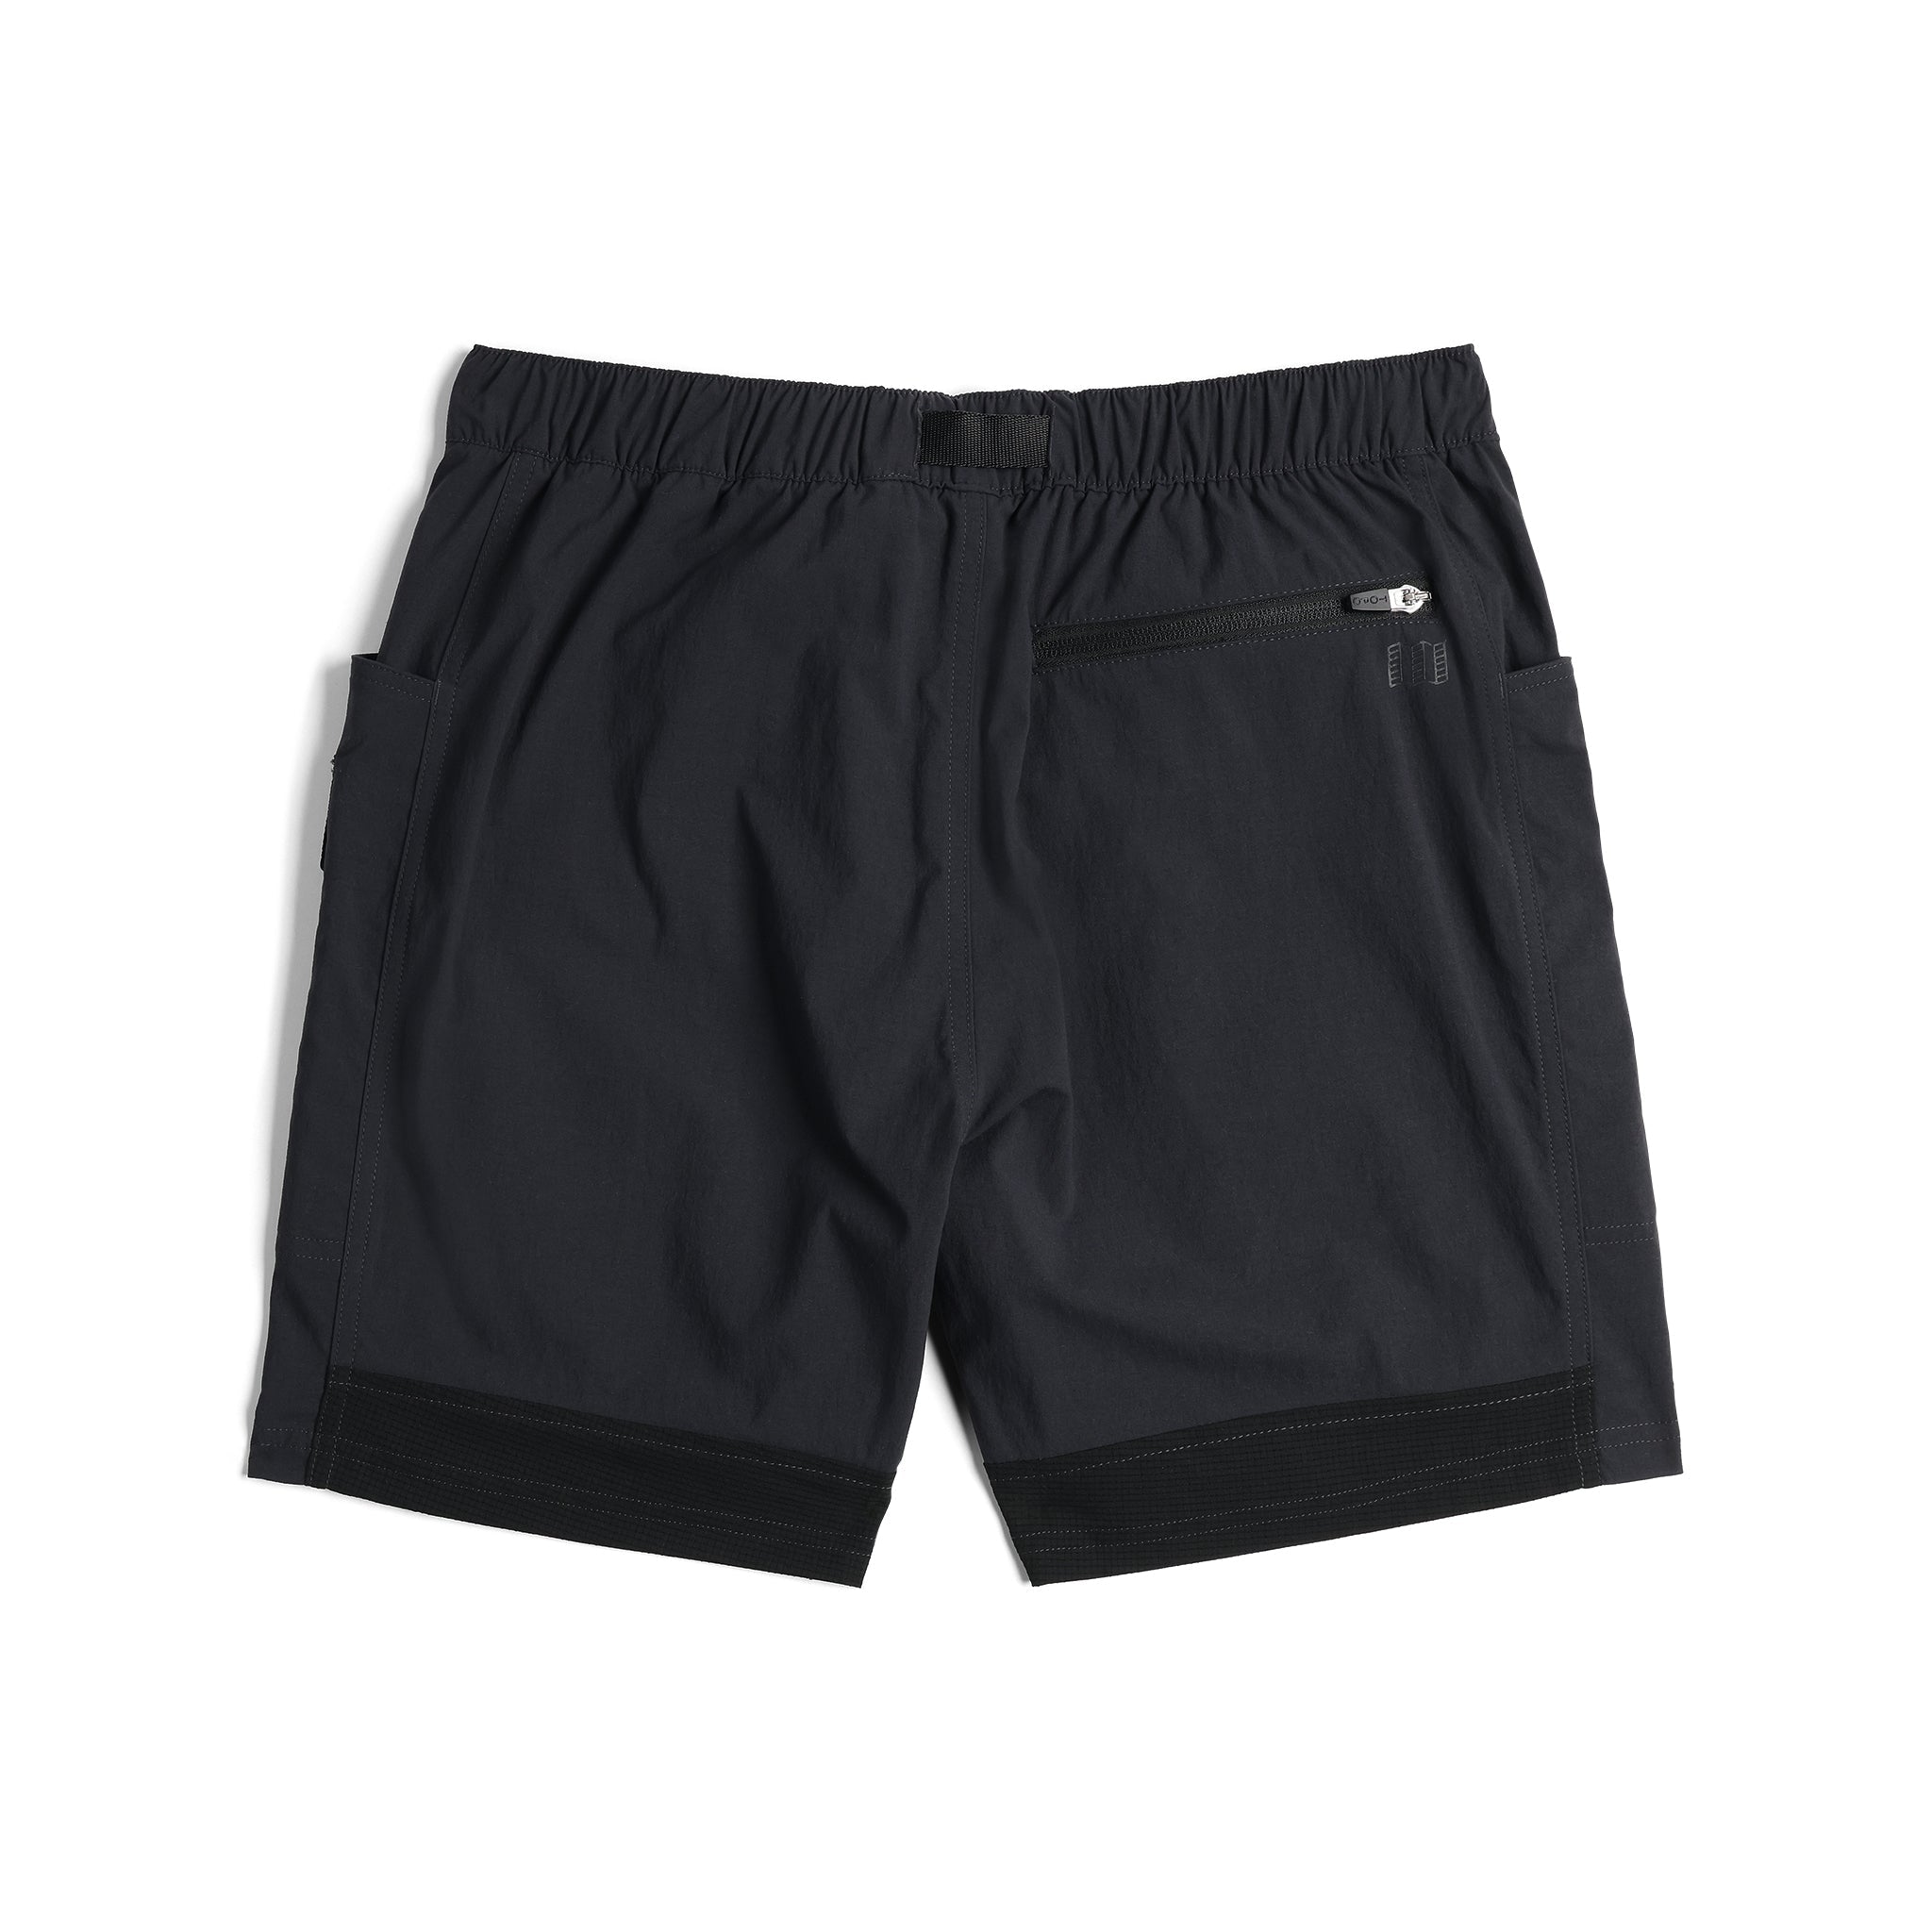 Back View of Topo Designs Retro River Shorts - Men's in "Black"